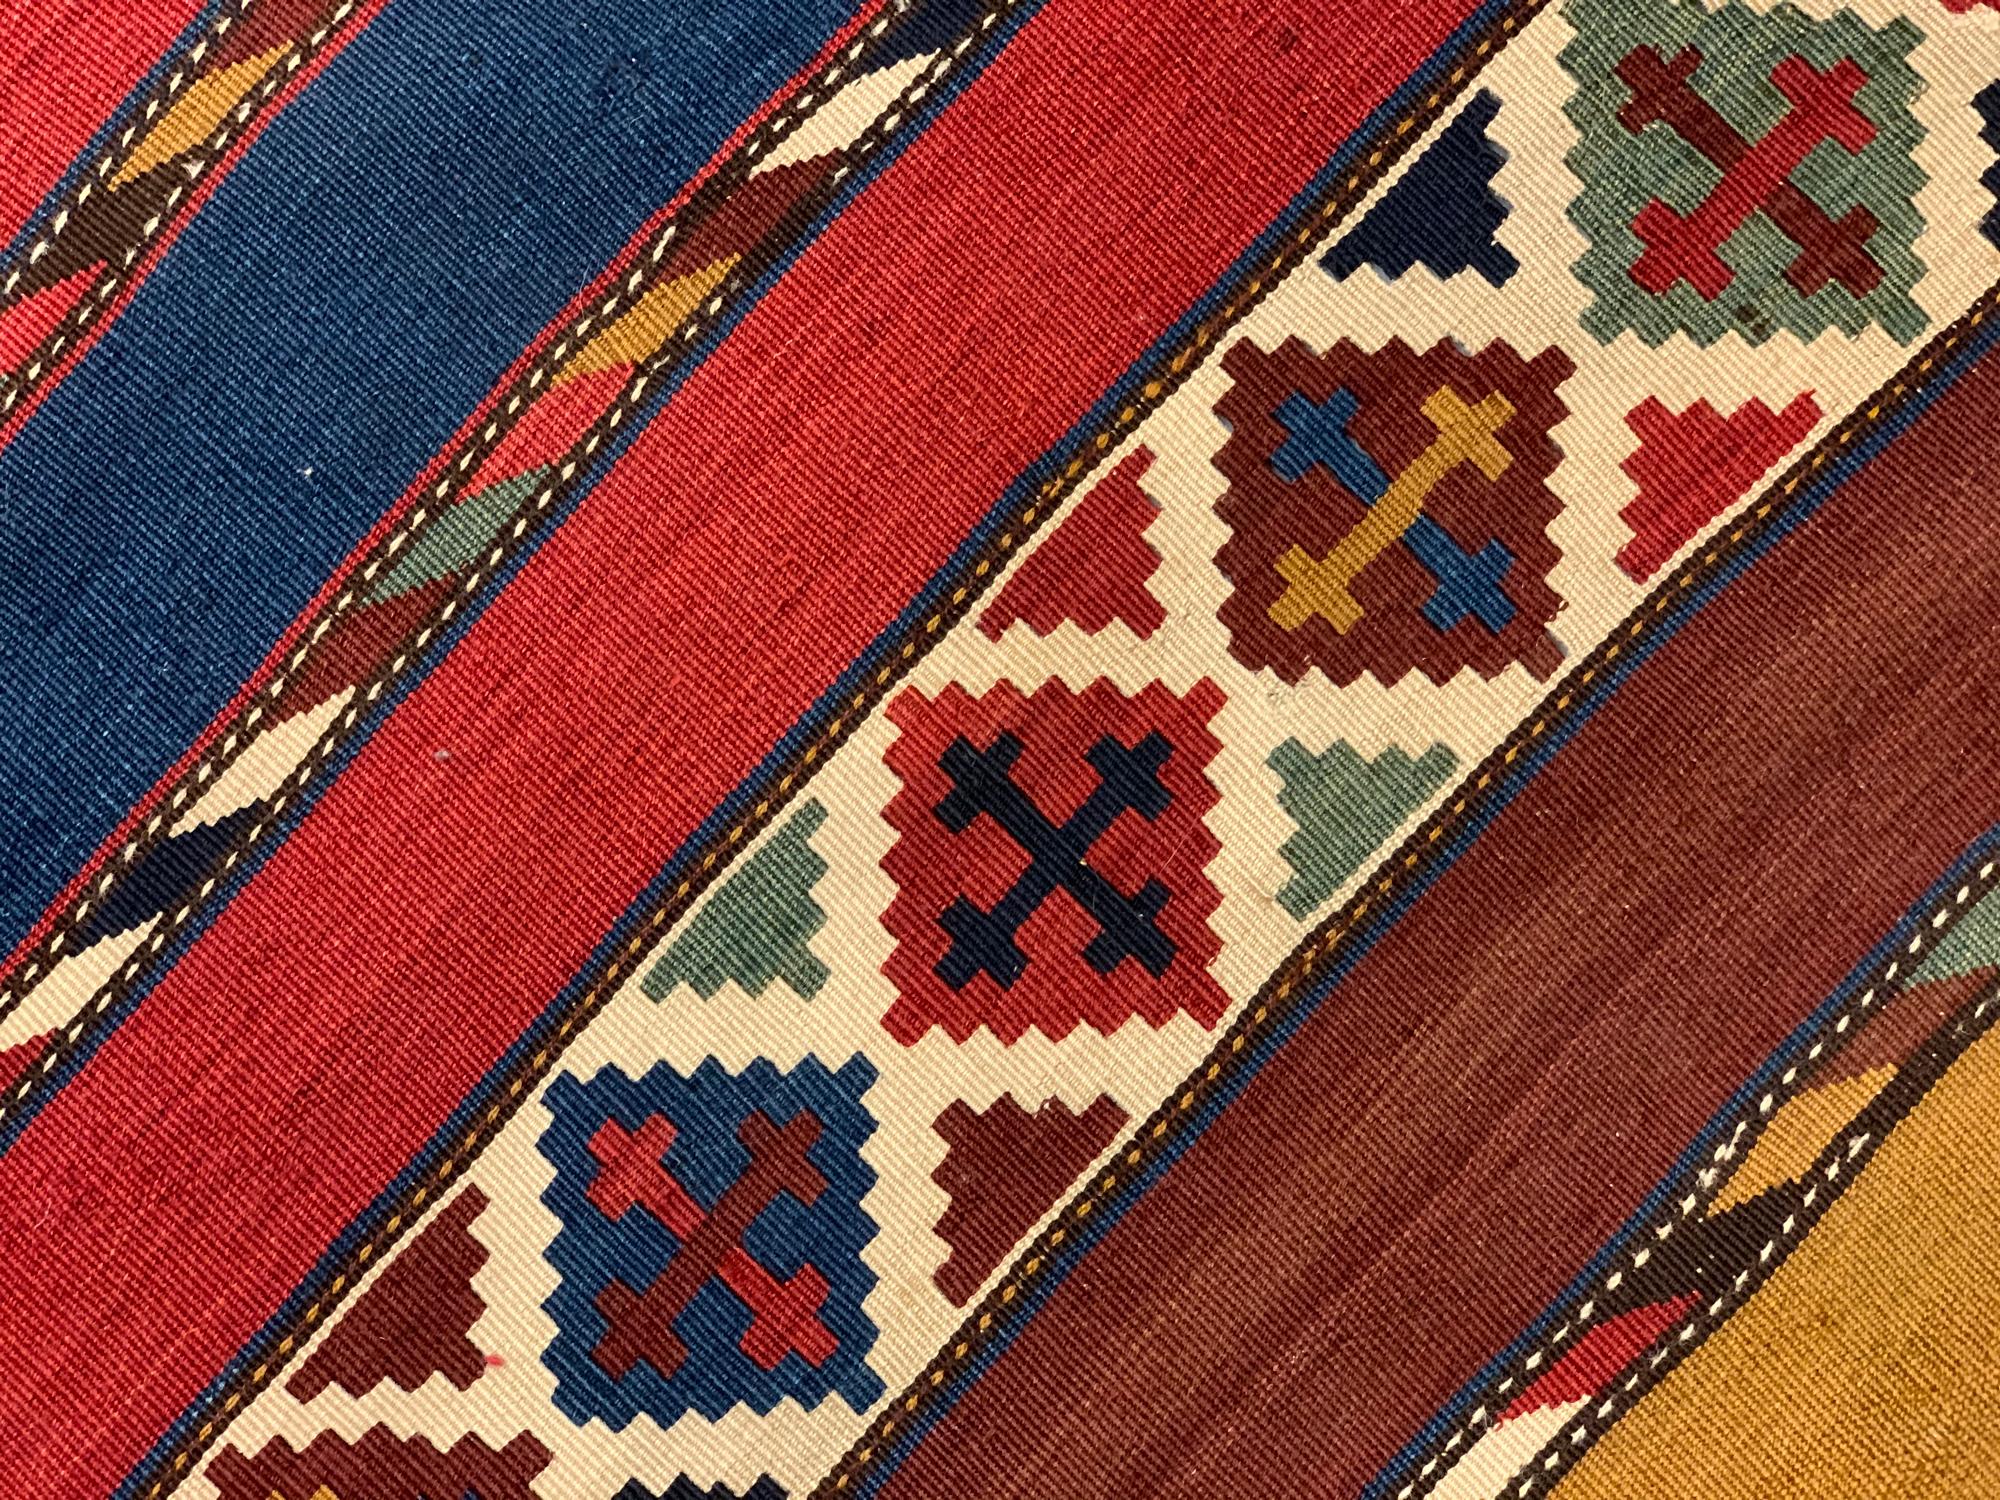 20th Century Rare Antique Caucasian Kilim Rug, Striped Kilim Traditional Wool Carpet